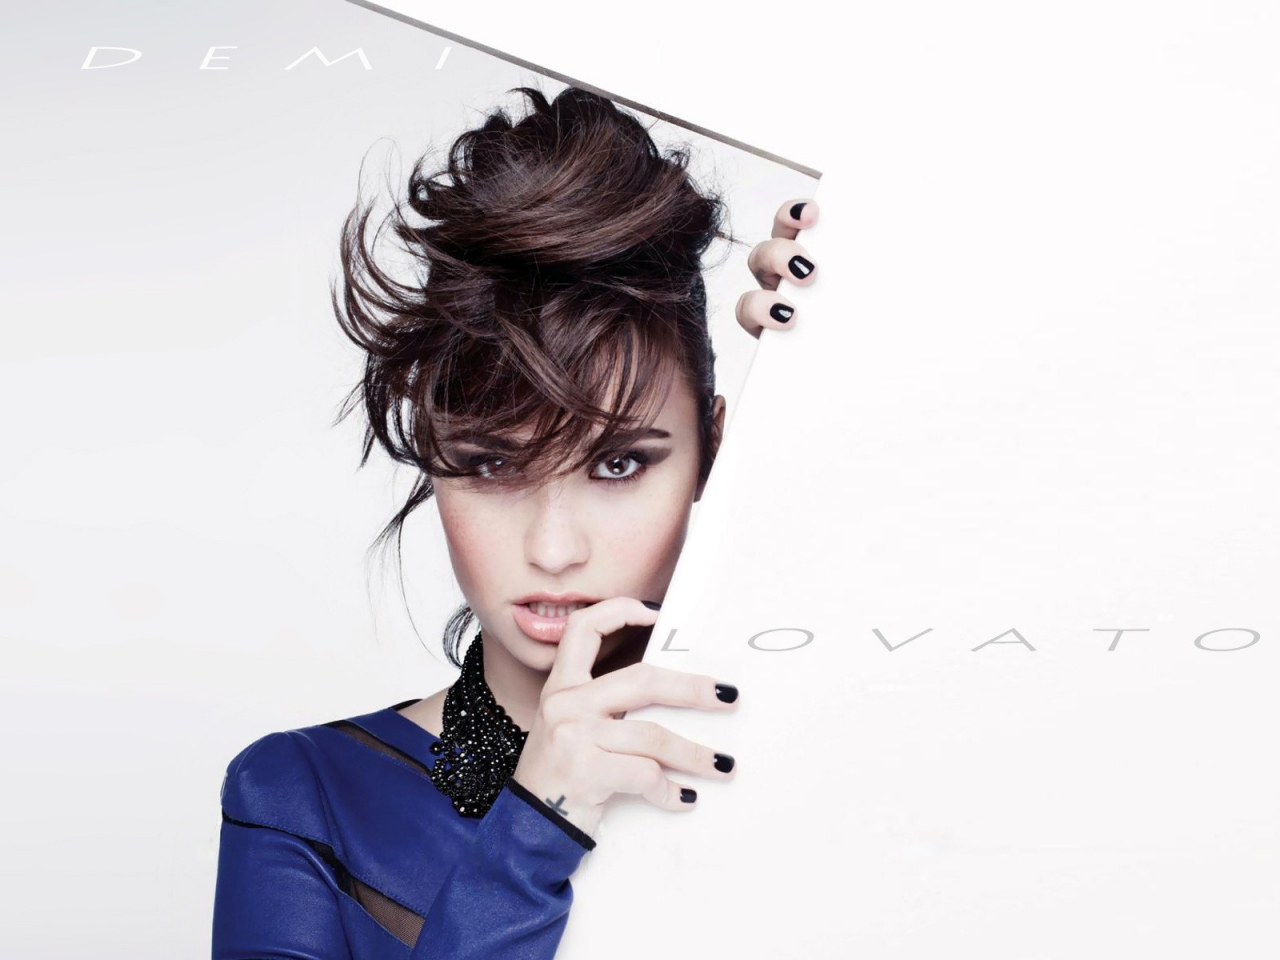 Superb Demi Lovato for 1280 x 960 resolution